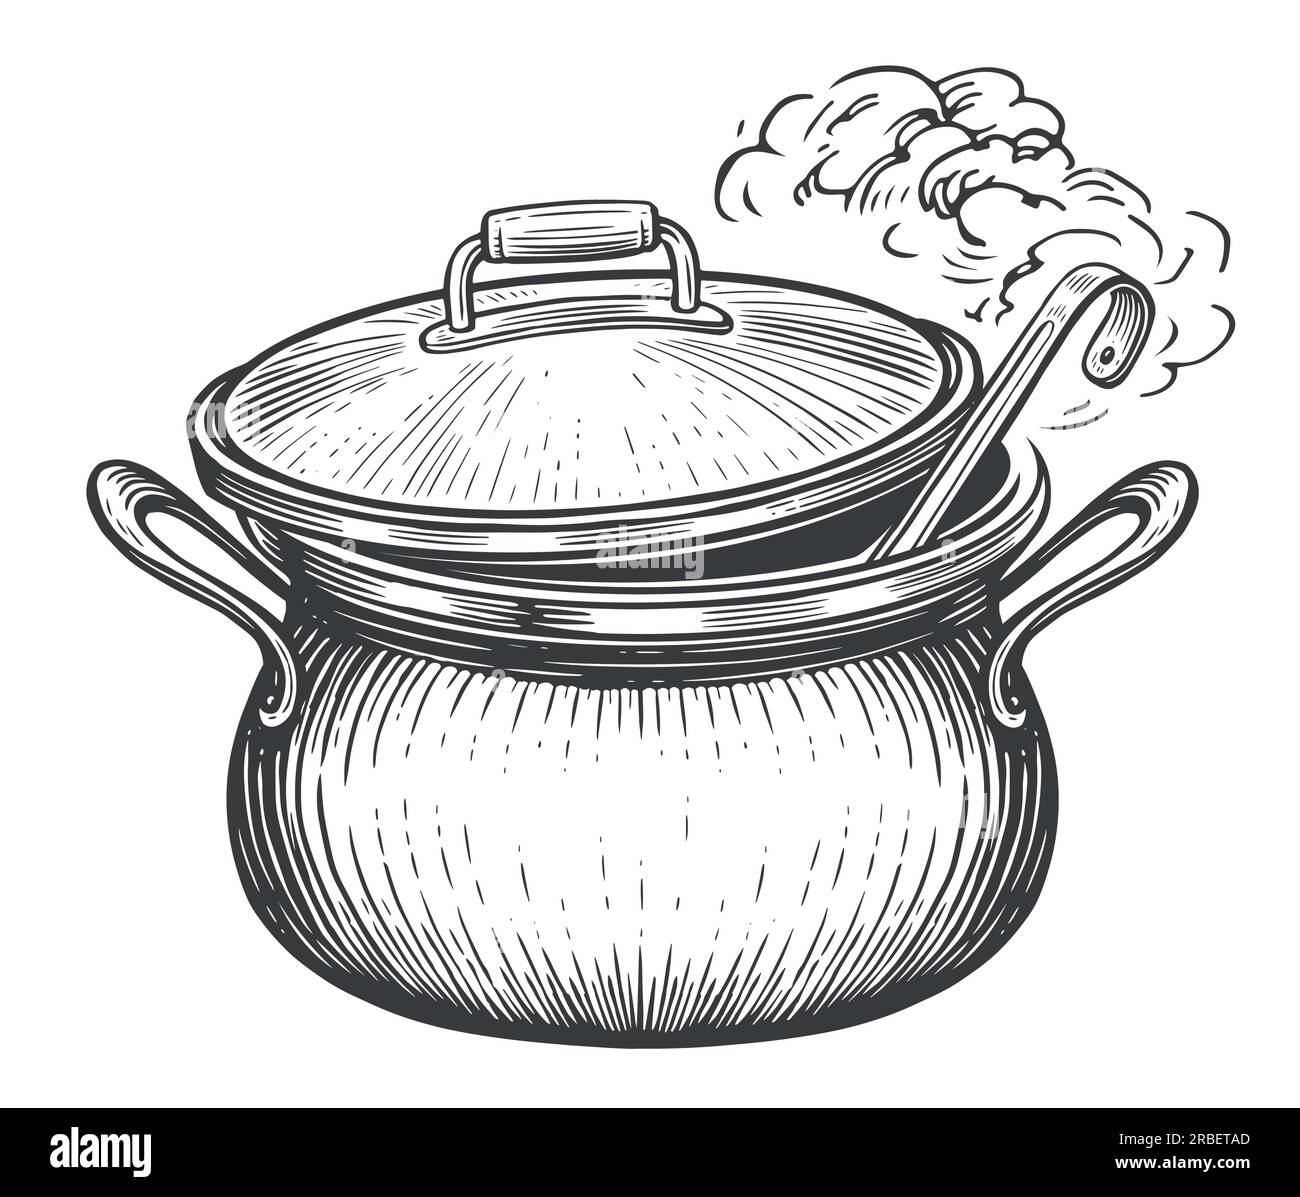 Soup pot ladle Black and White Stock Photos & Images - Alamy